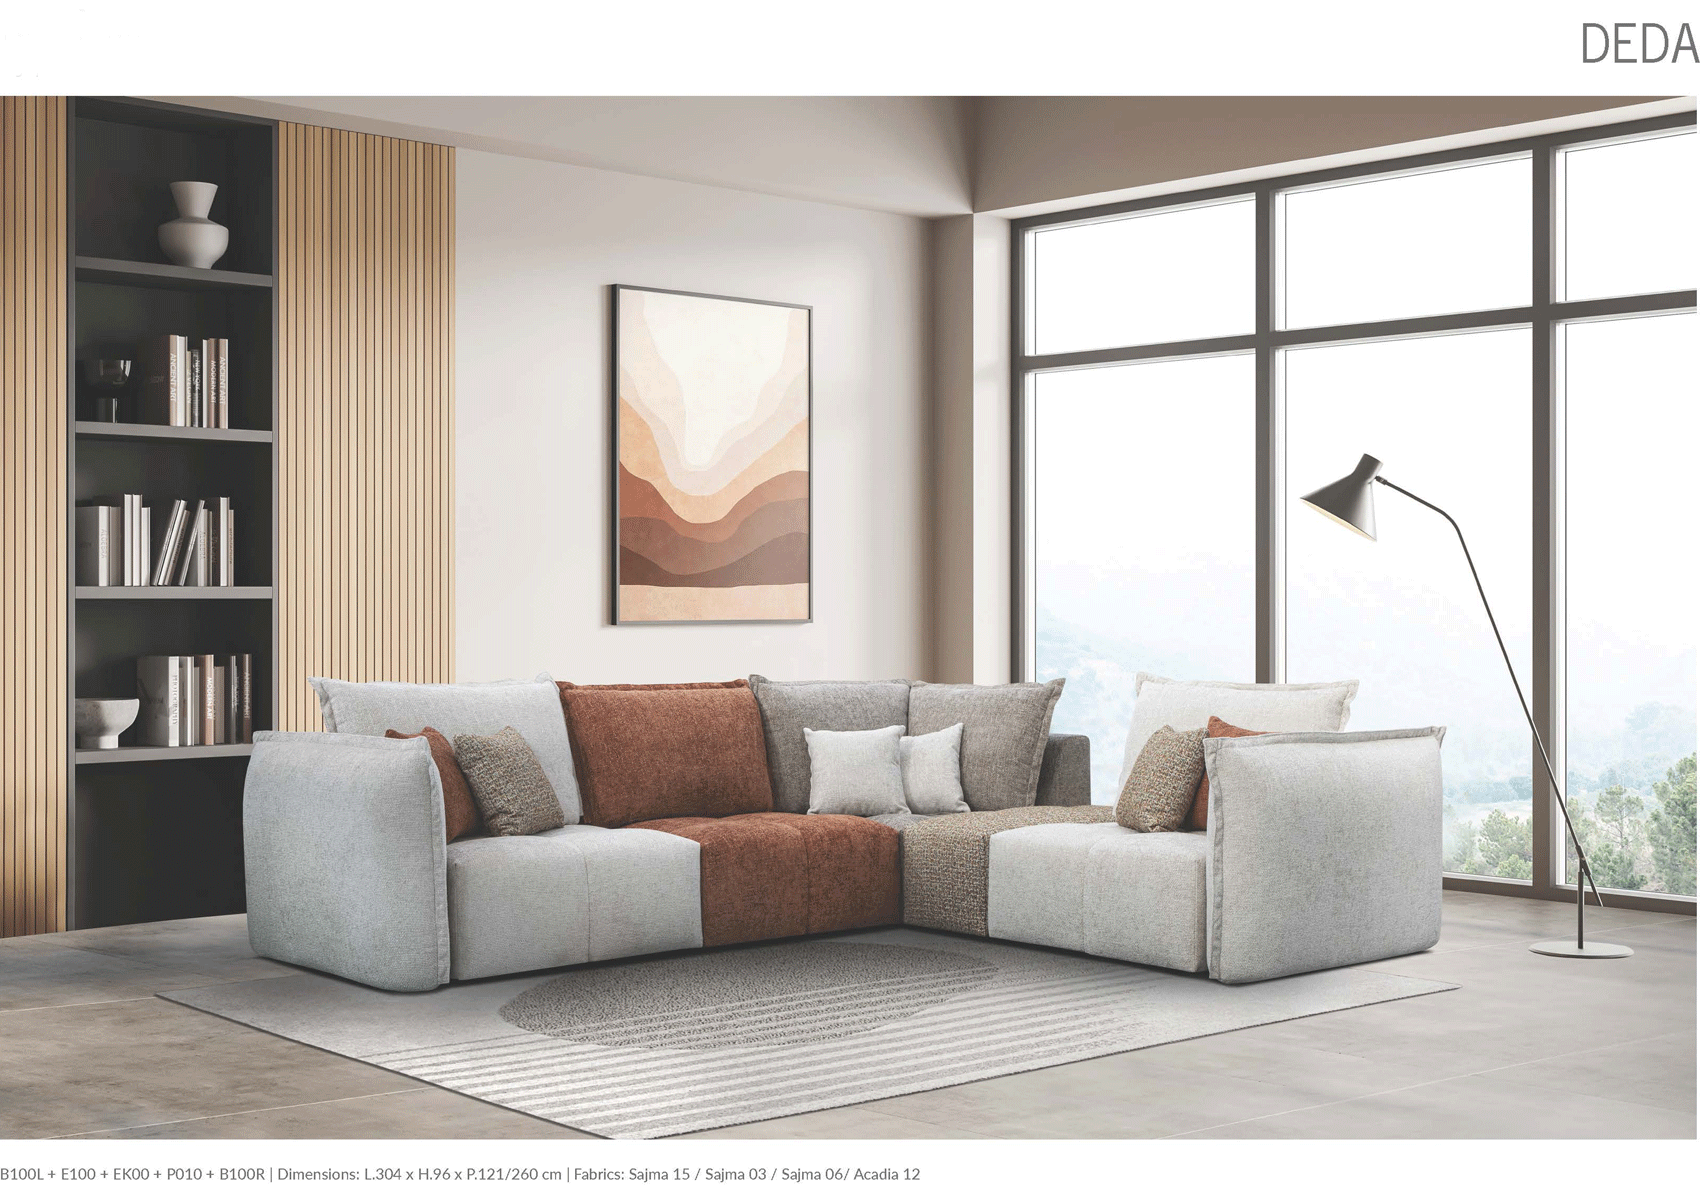 Living Room Furniture Rugs Deda Sectional